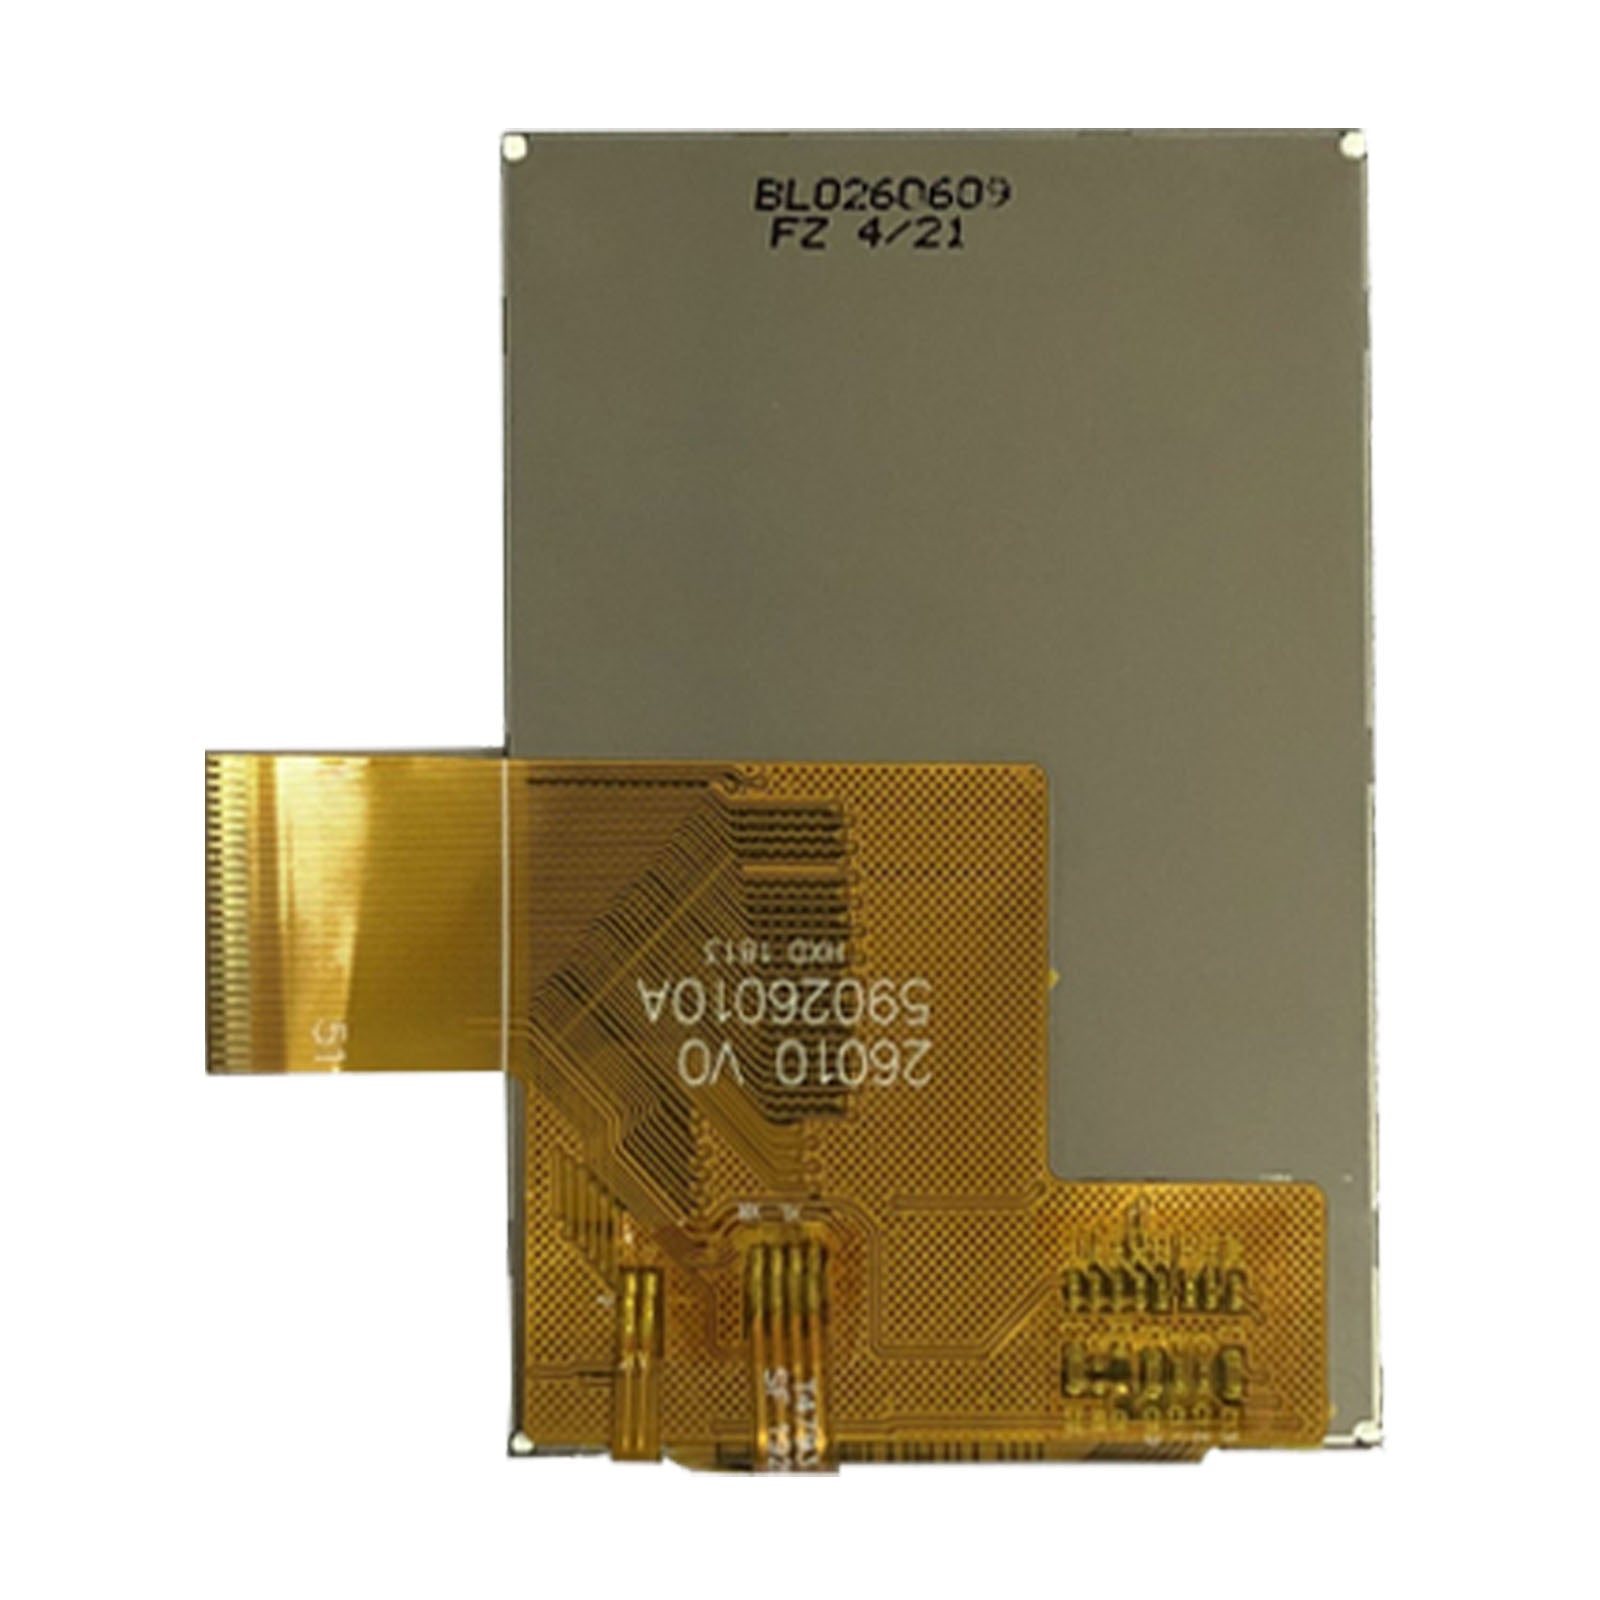 DisplayModule 2.6" 240X320 Transflective Display Panel with Resistive Touch – MCU/SPI/RGB